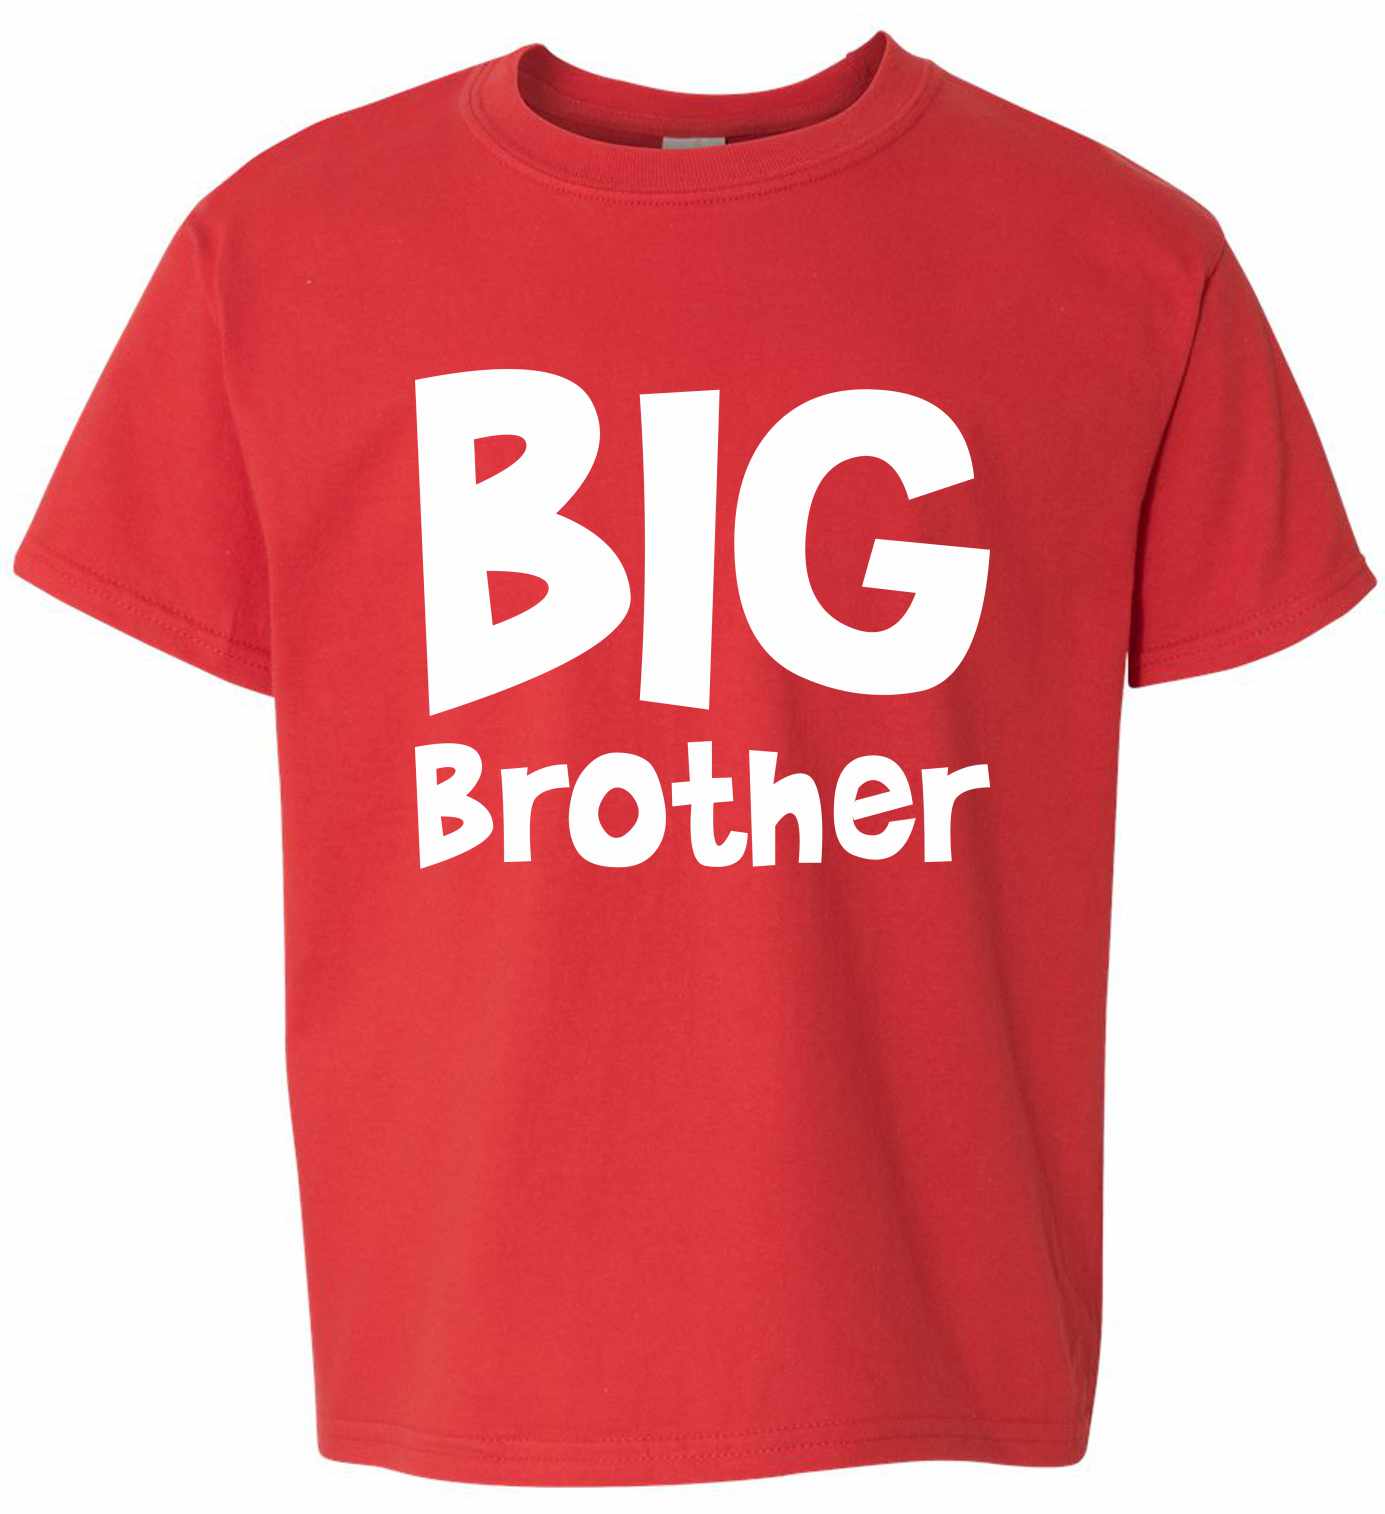 BIG BROTHER on Kids T-Shirt